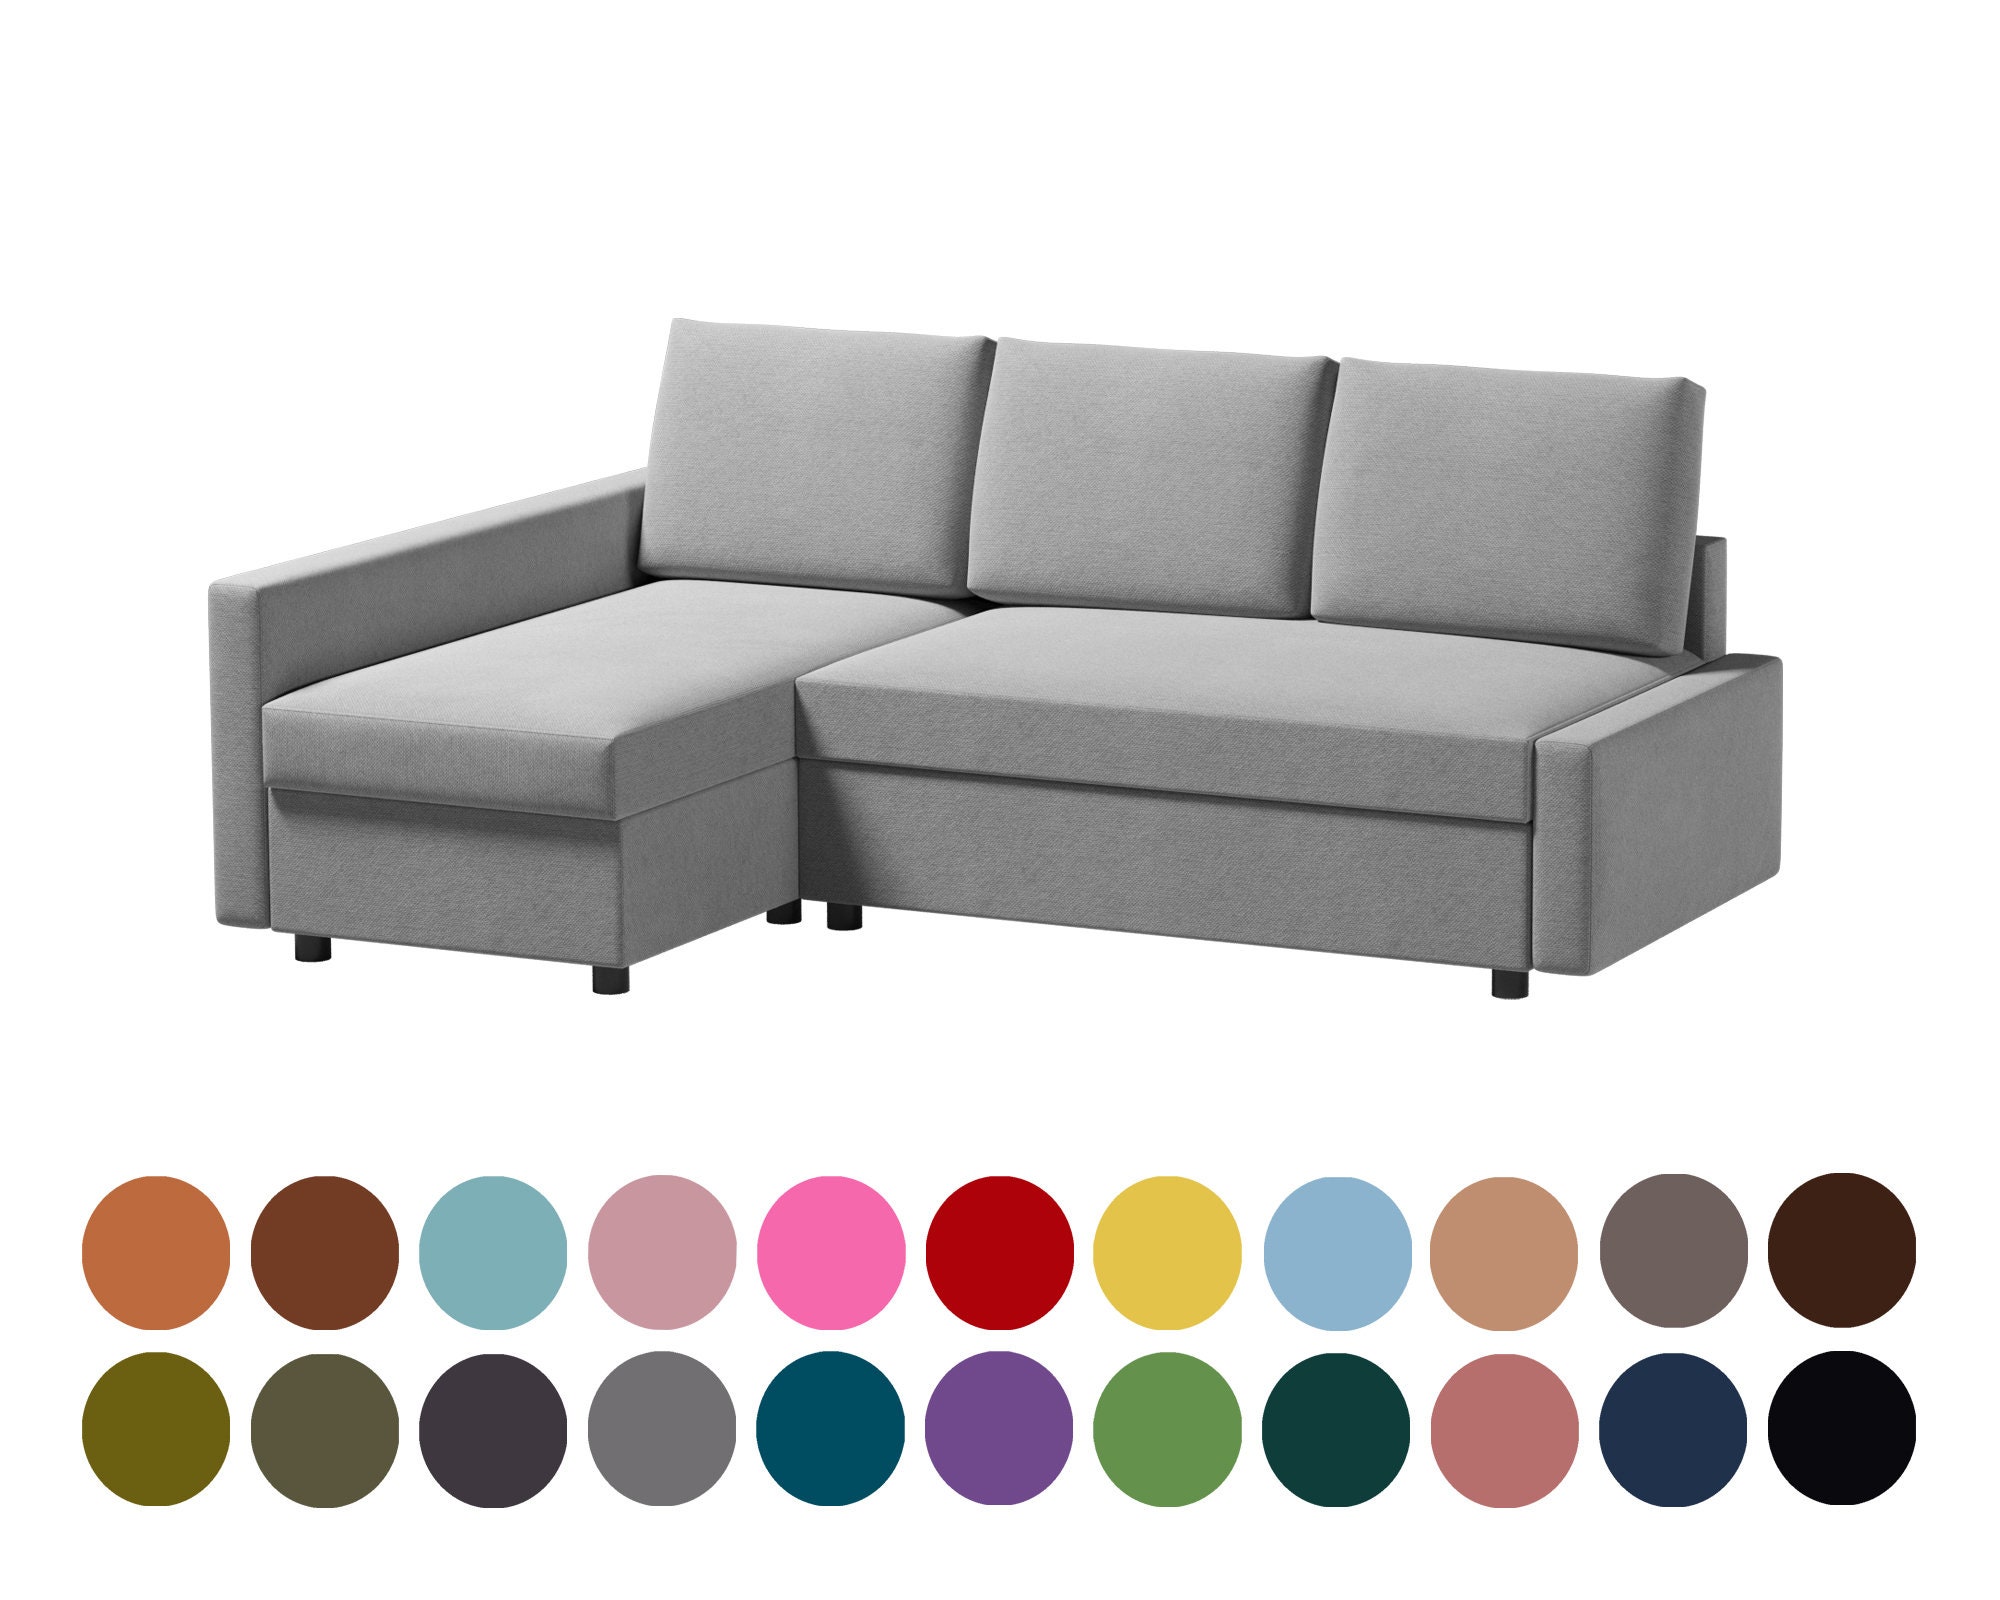 Fodera per divano letto angolare Friheten personalizzata, Fodera  personalizzata per divano letto angolare Friheten, Opzioni multi colore,  Oltre 400 opzioni di tessuto, Fodera Friheten -  Italia